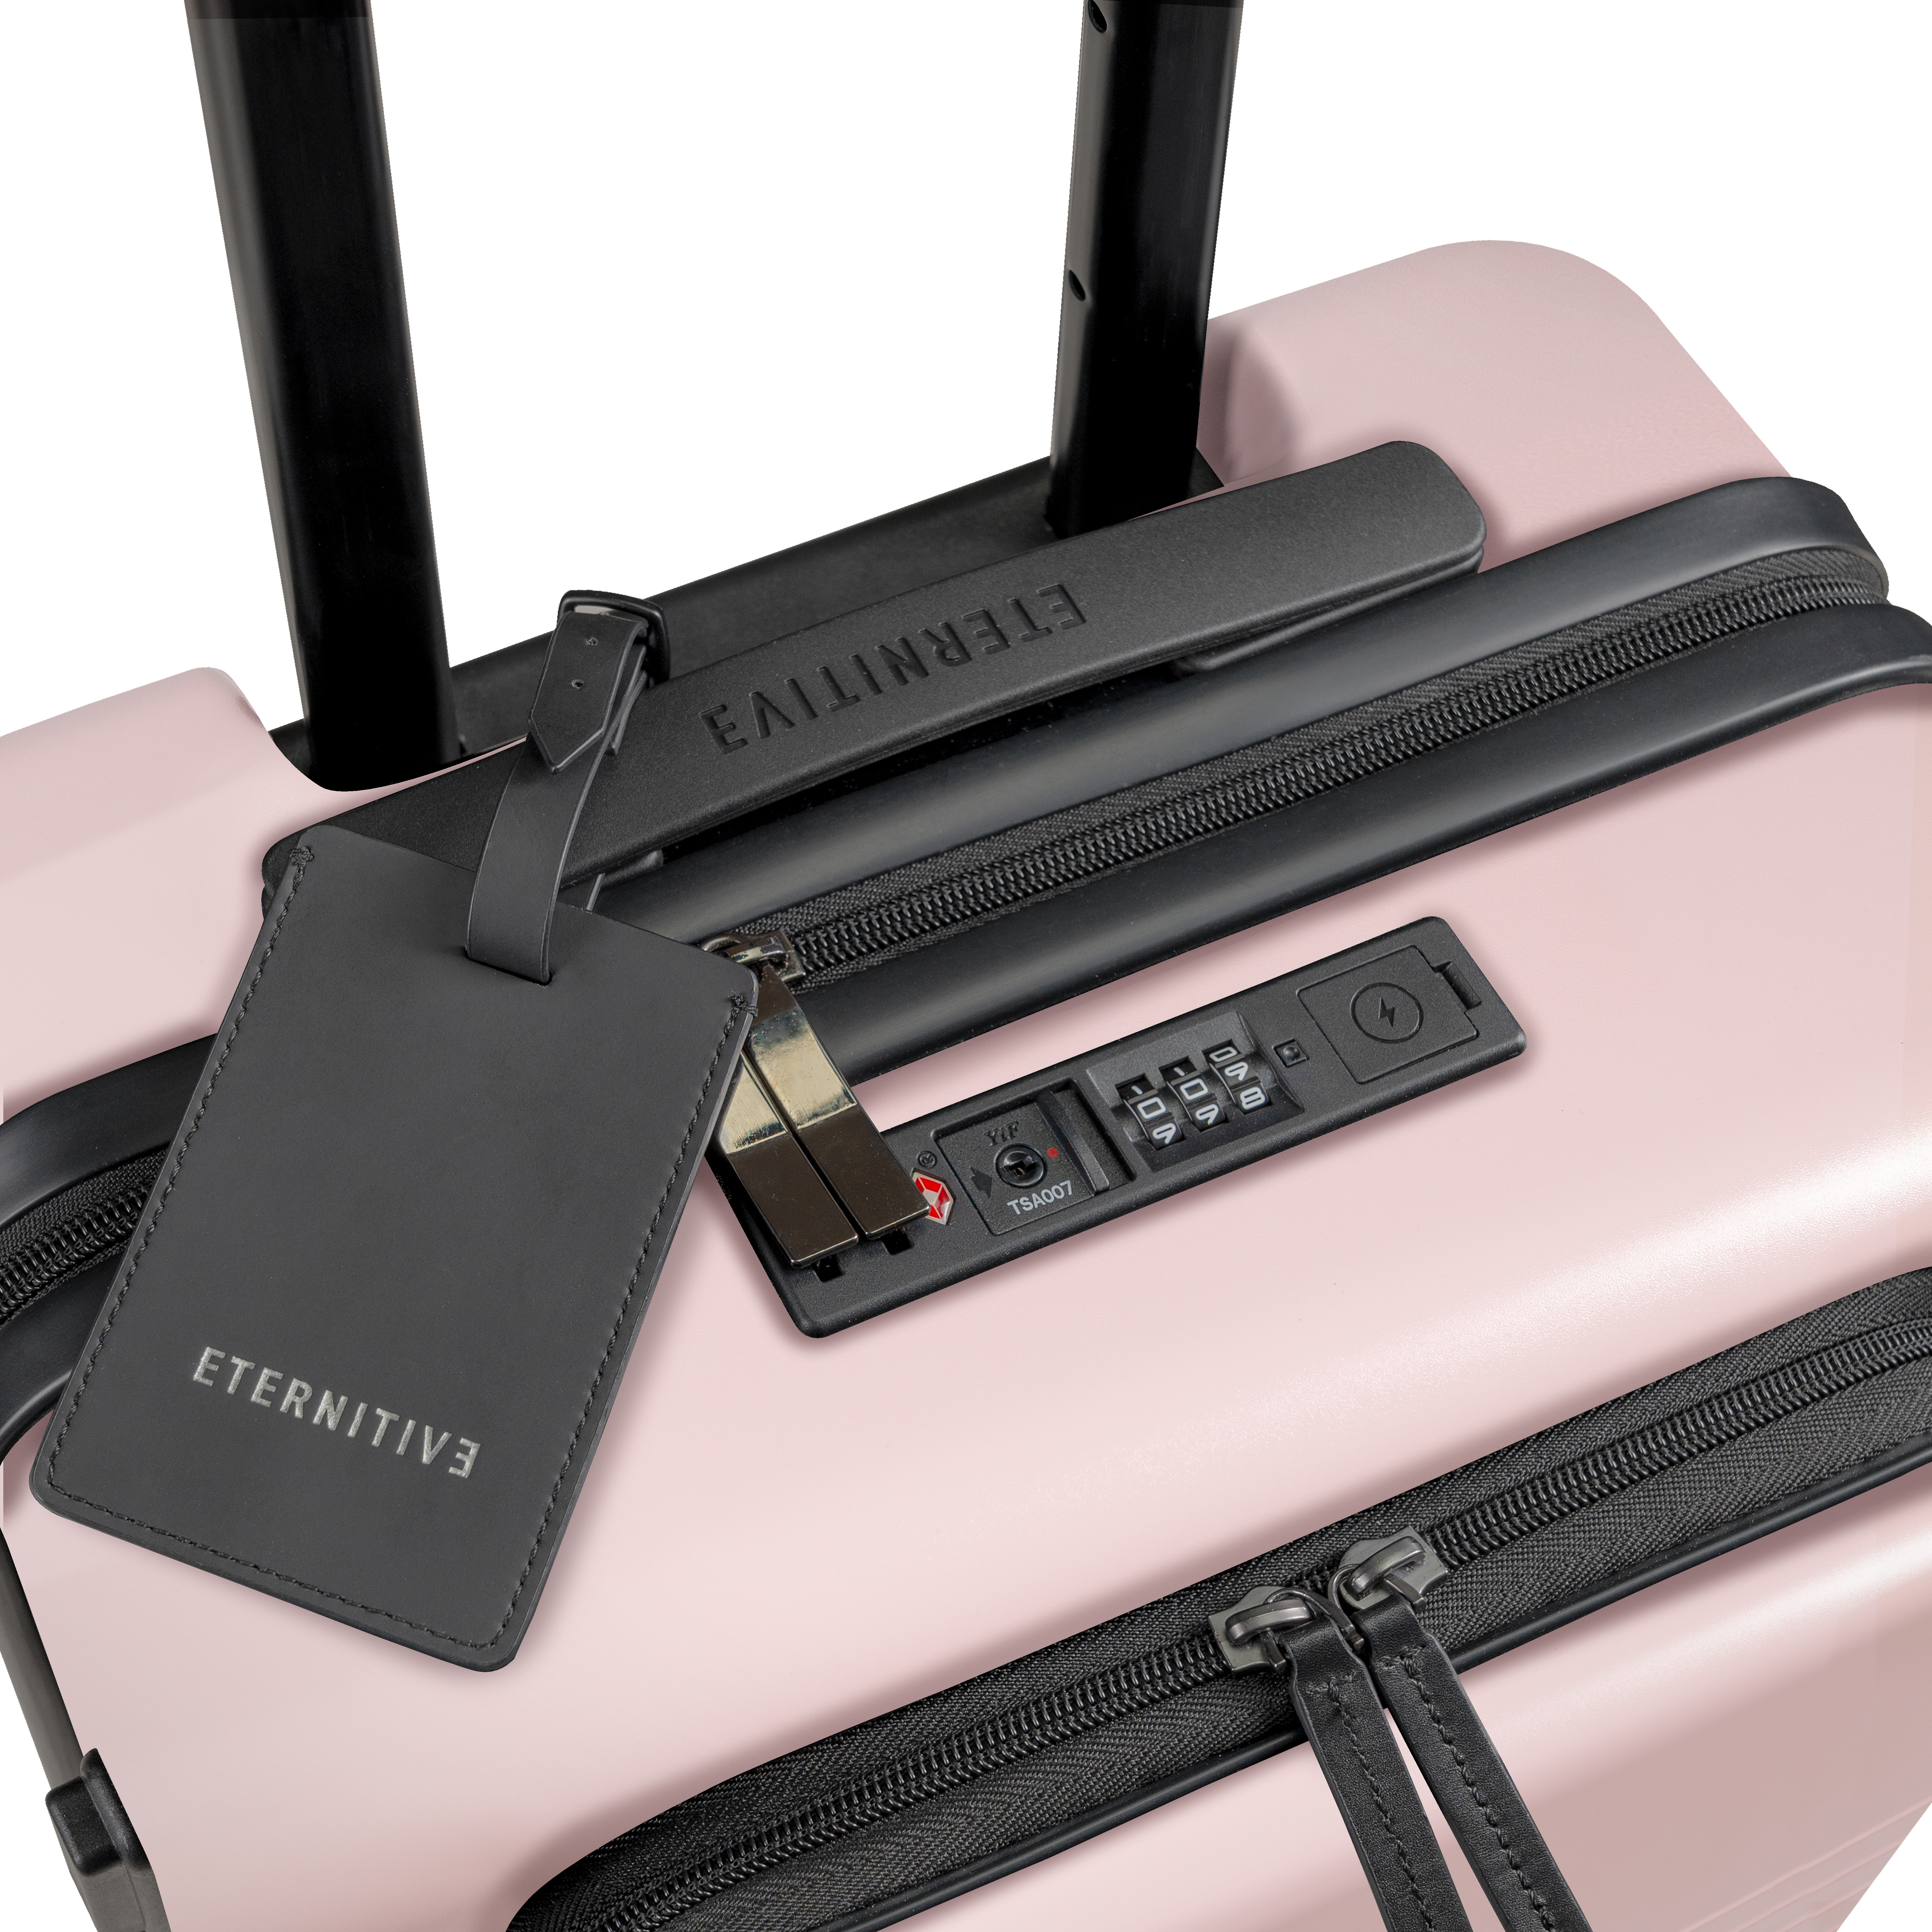 E3 Koffer set 2 teilig: \n Handgepäck plus + Großer Koffer Pink